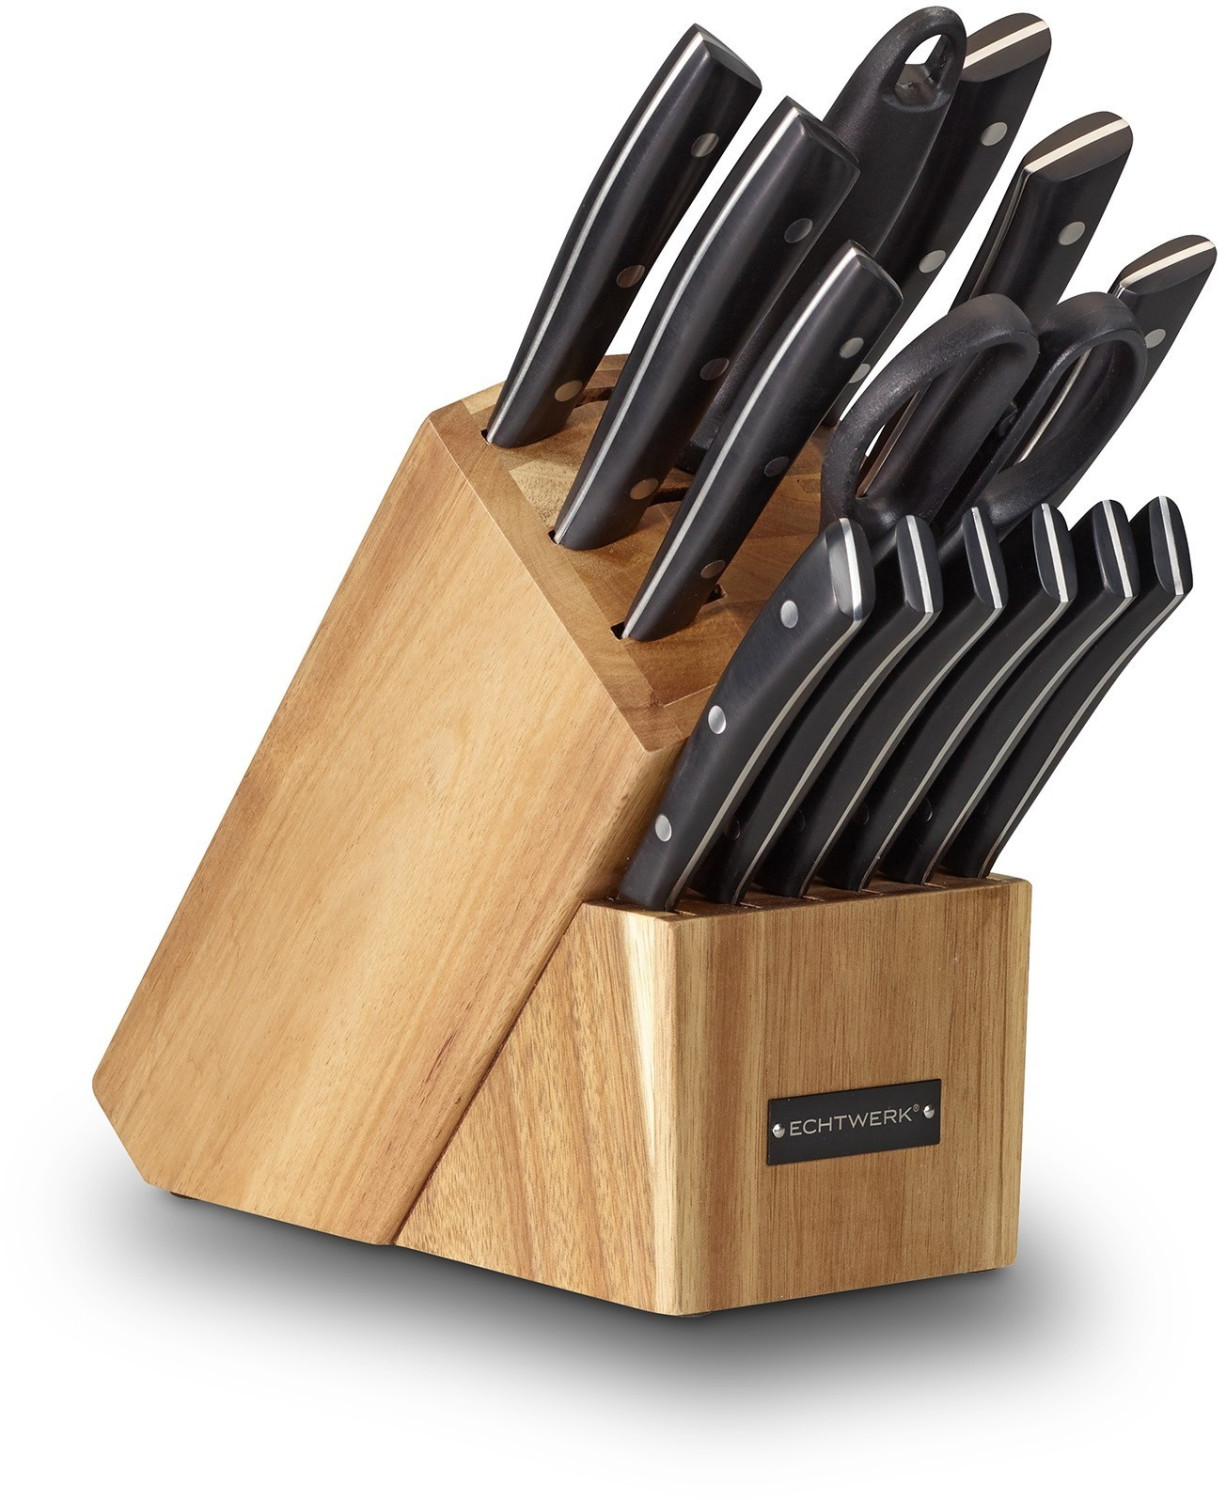 Echtwerk Premium Knife Block 15 pcs Acacia Wood